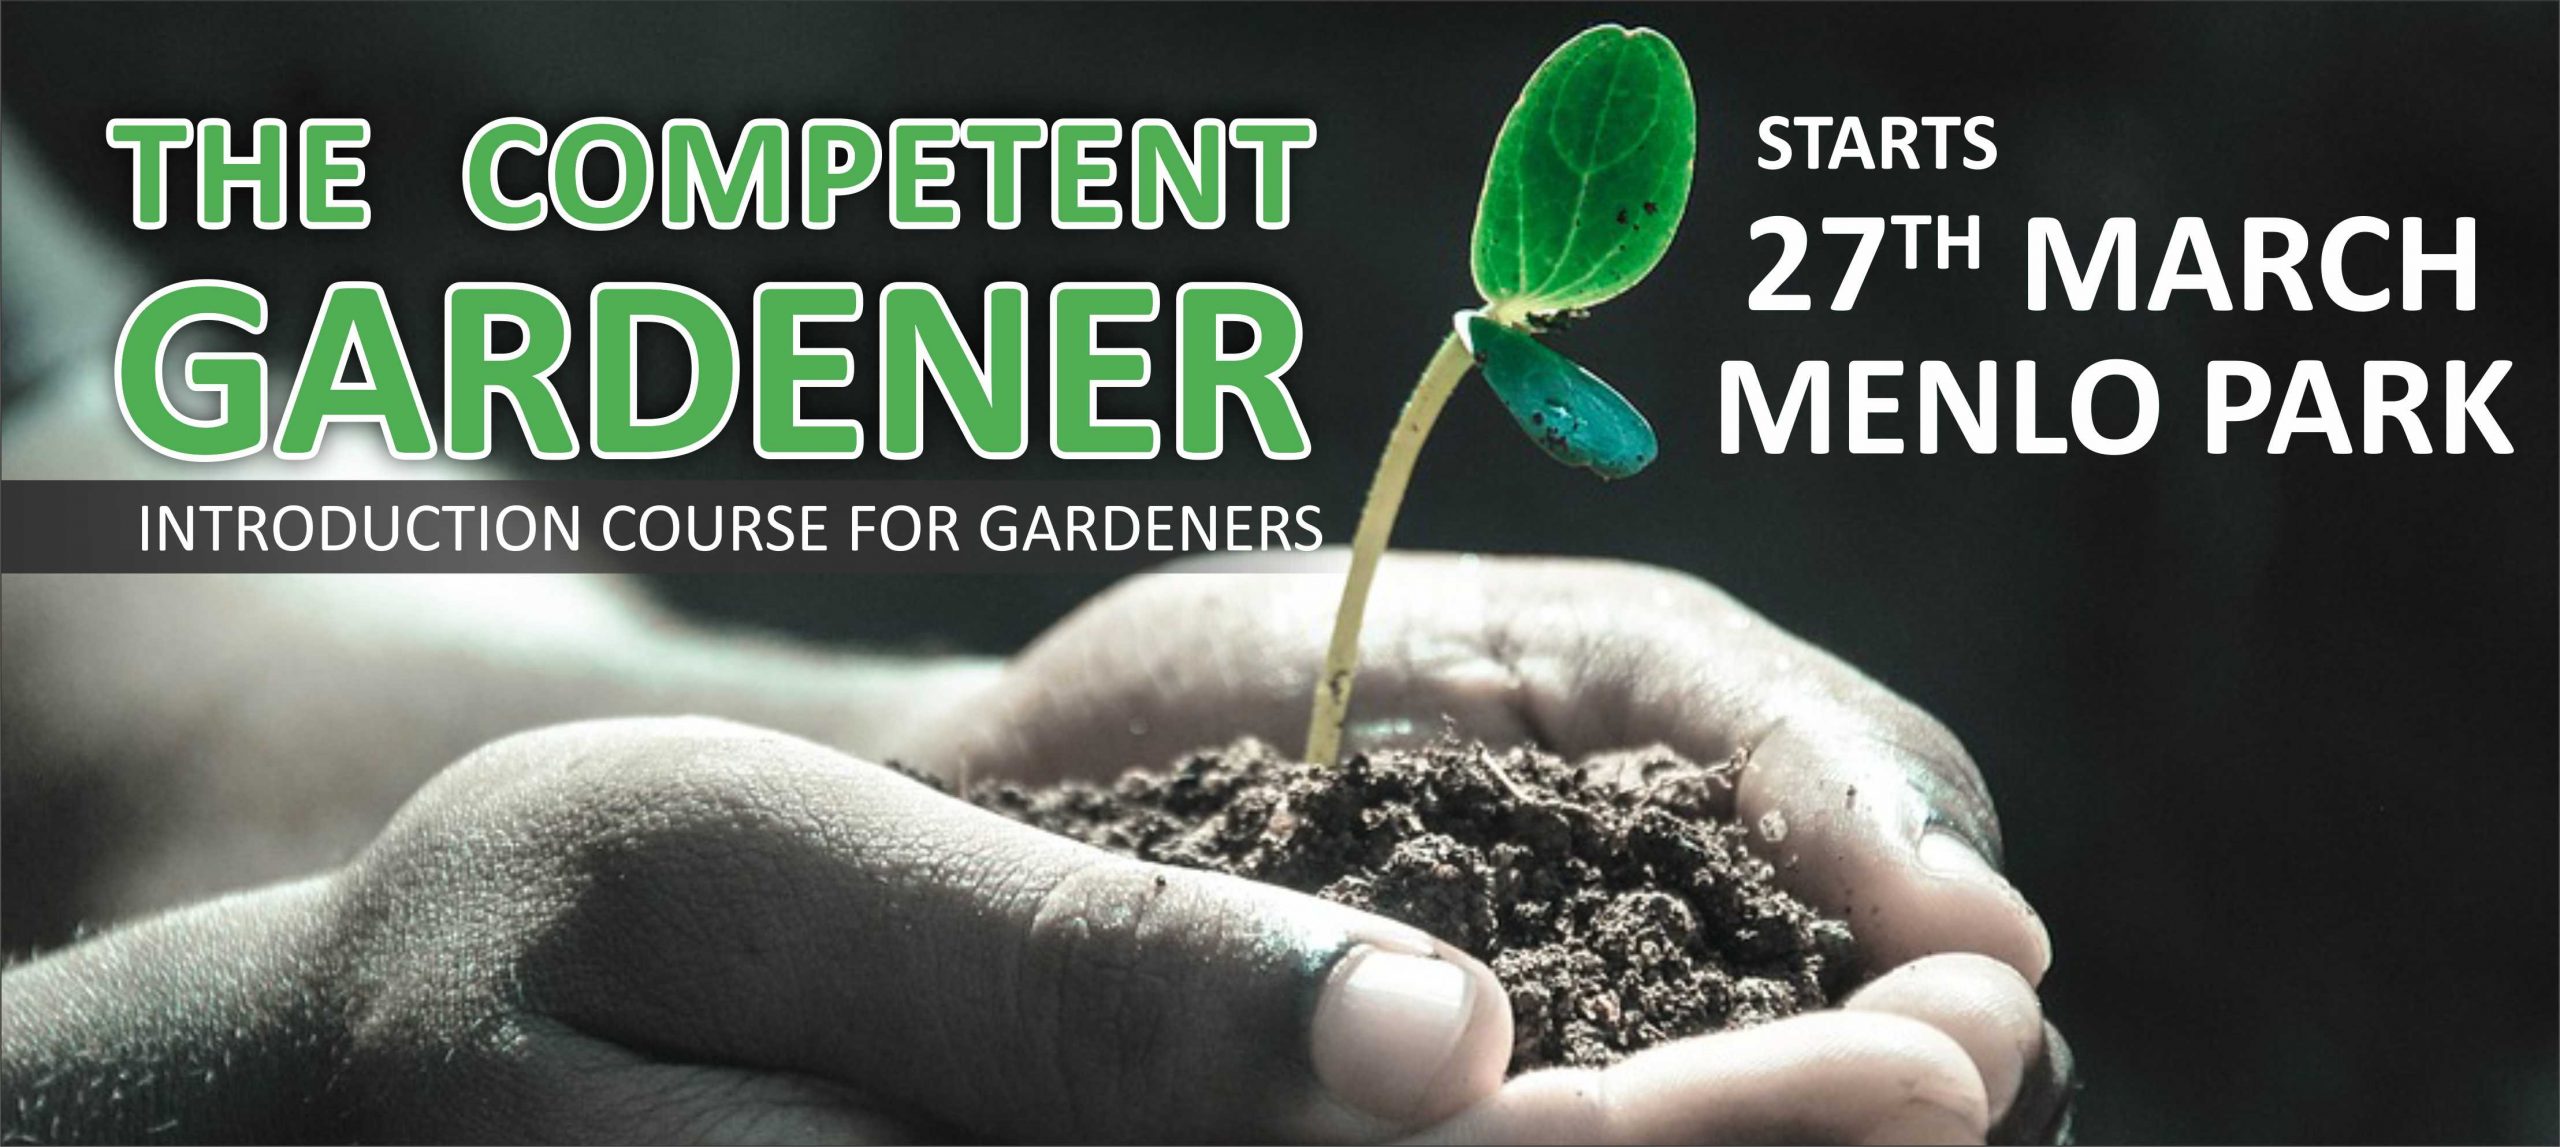 Gardeners course